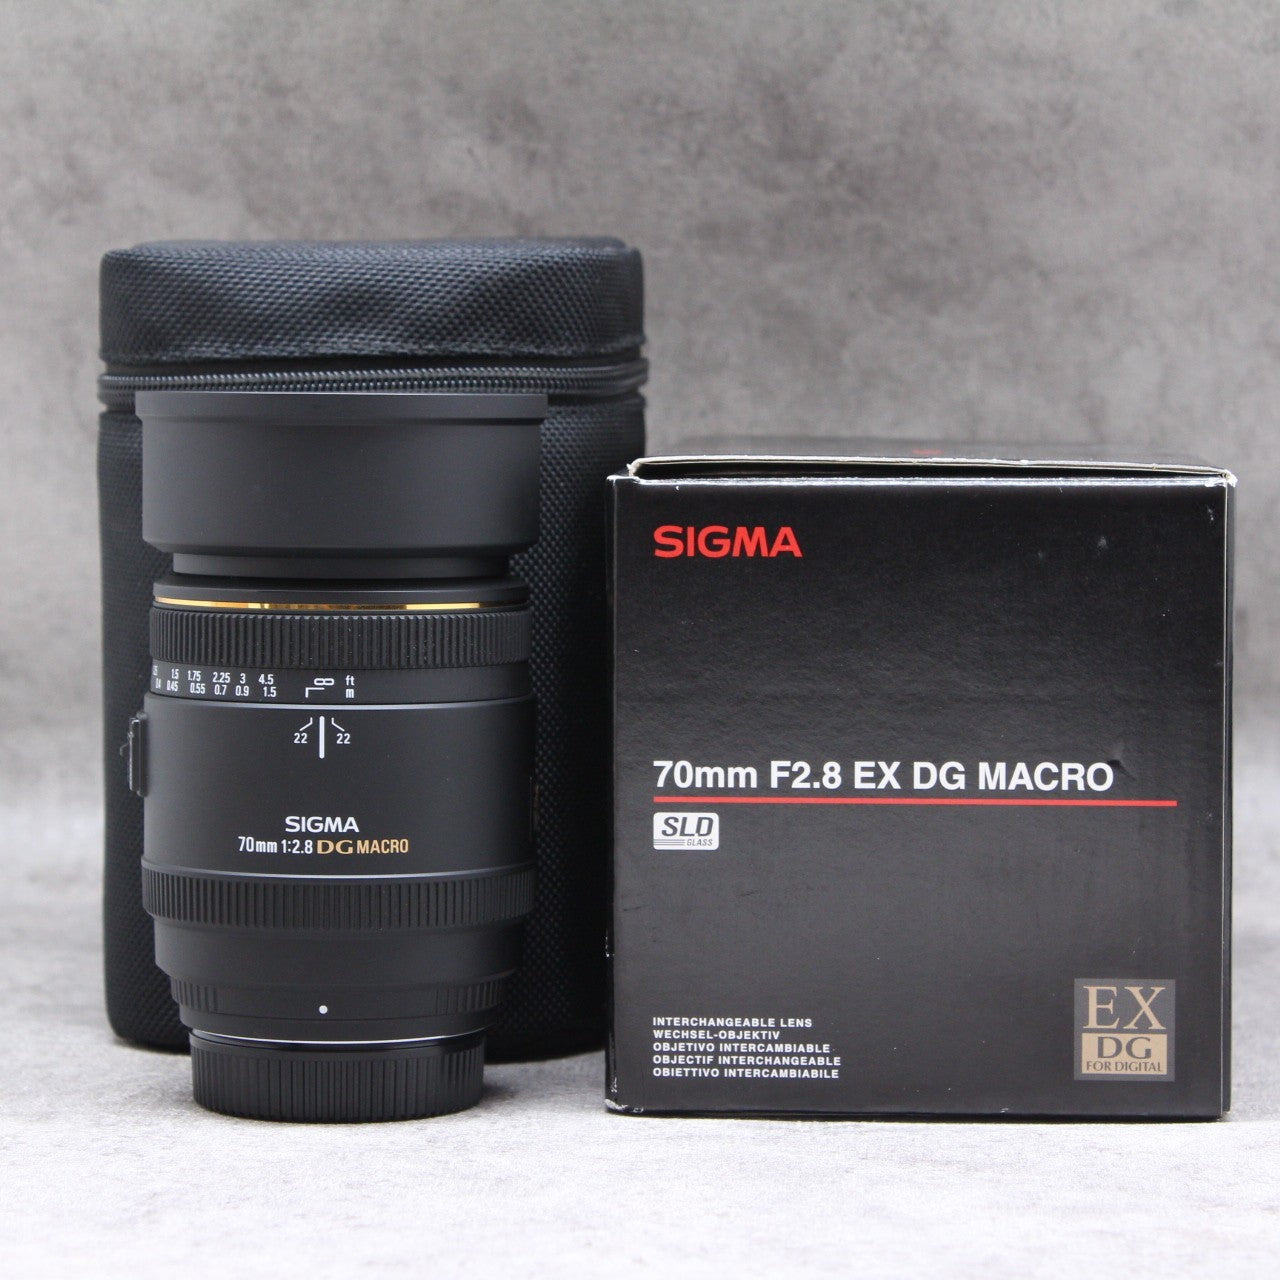 SIGMA MACRO 70mm F2.8 EX DG (ペンタックス用)焦点距離50mm70mm